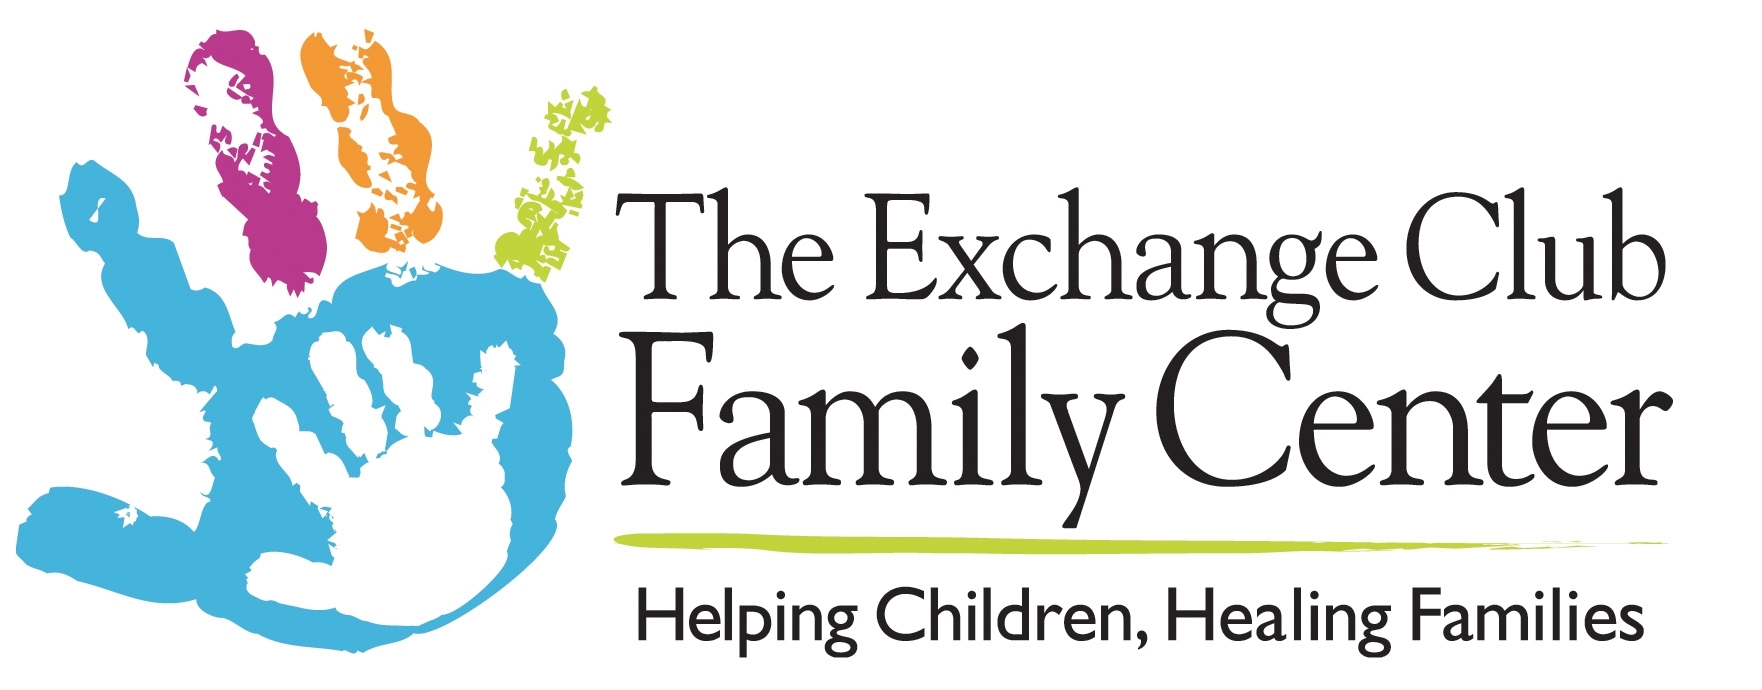 The Exchange Club Family Center logo